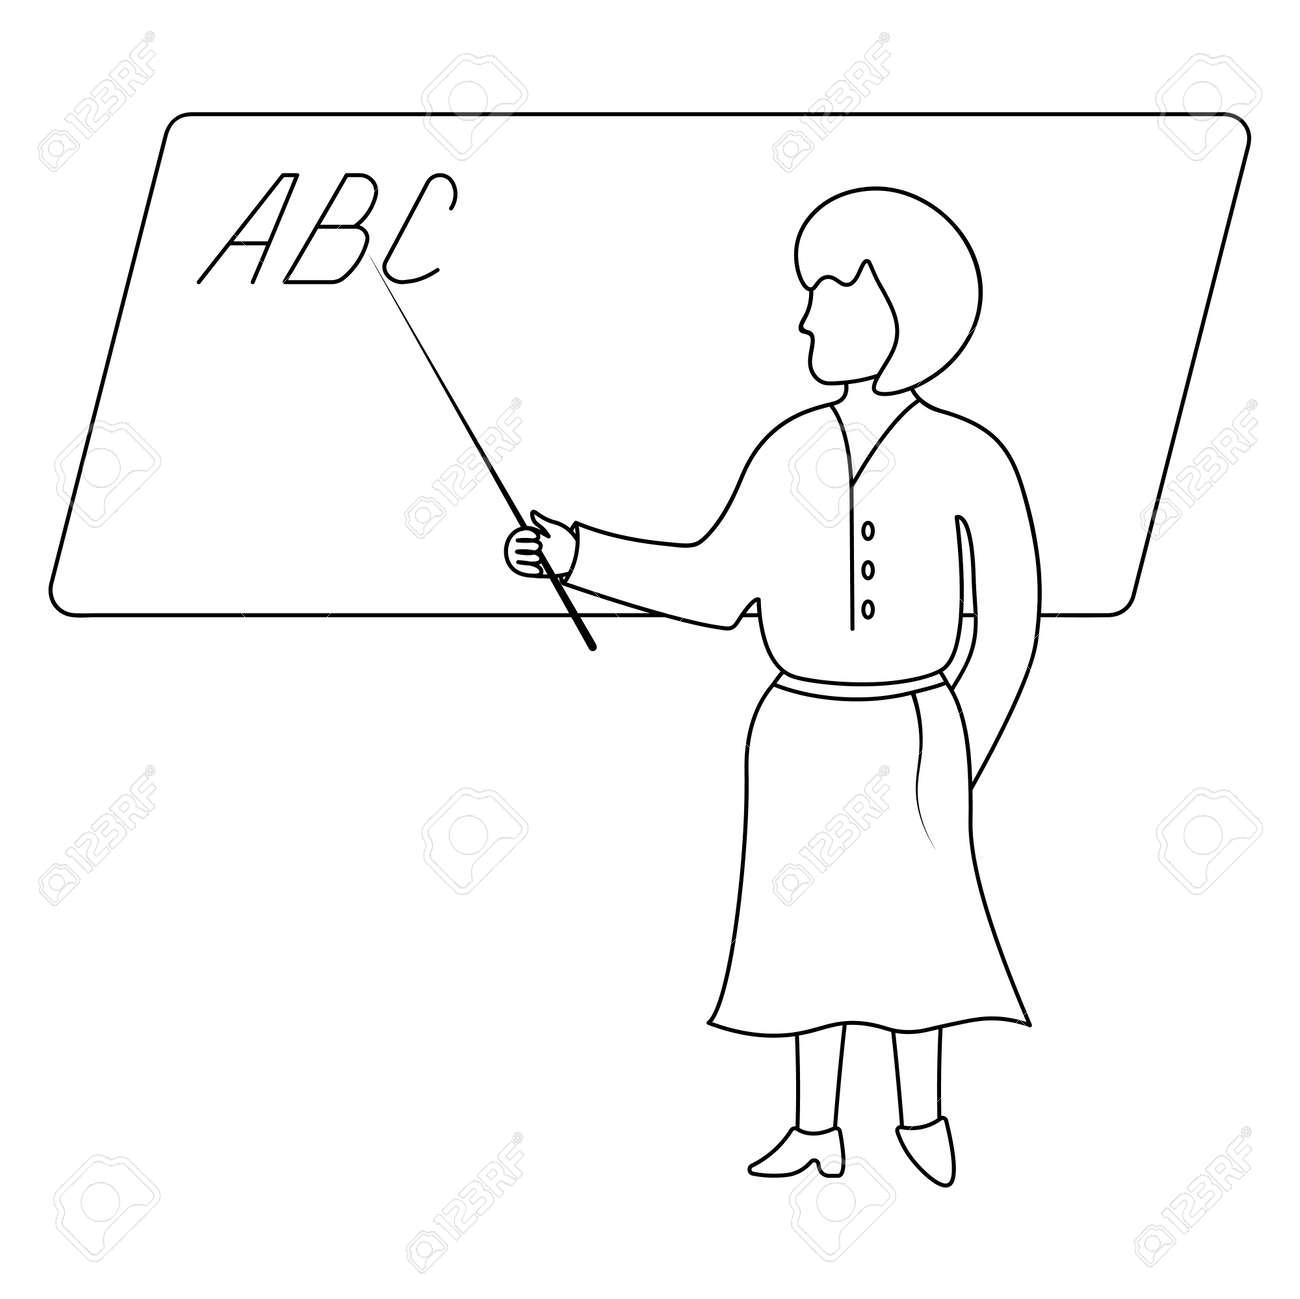 The Teacher Teaches Students The Alphabet Sketch A Woman Points